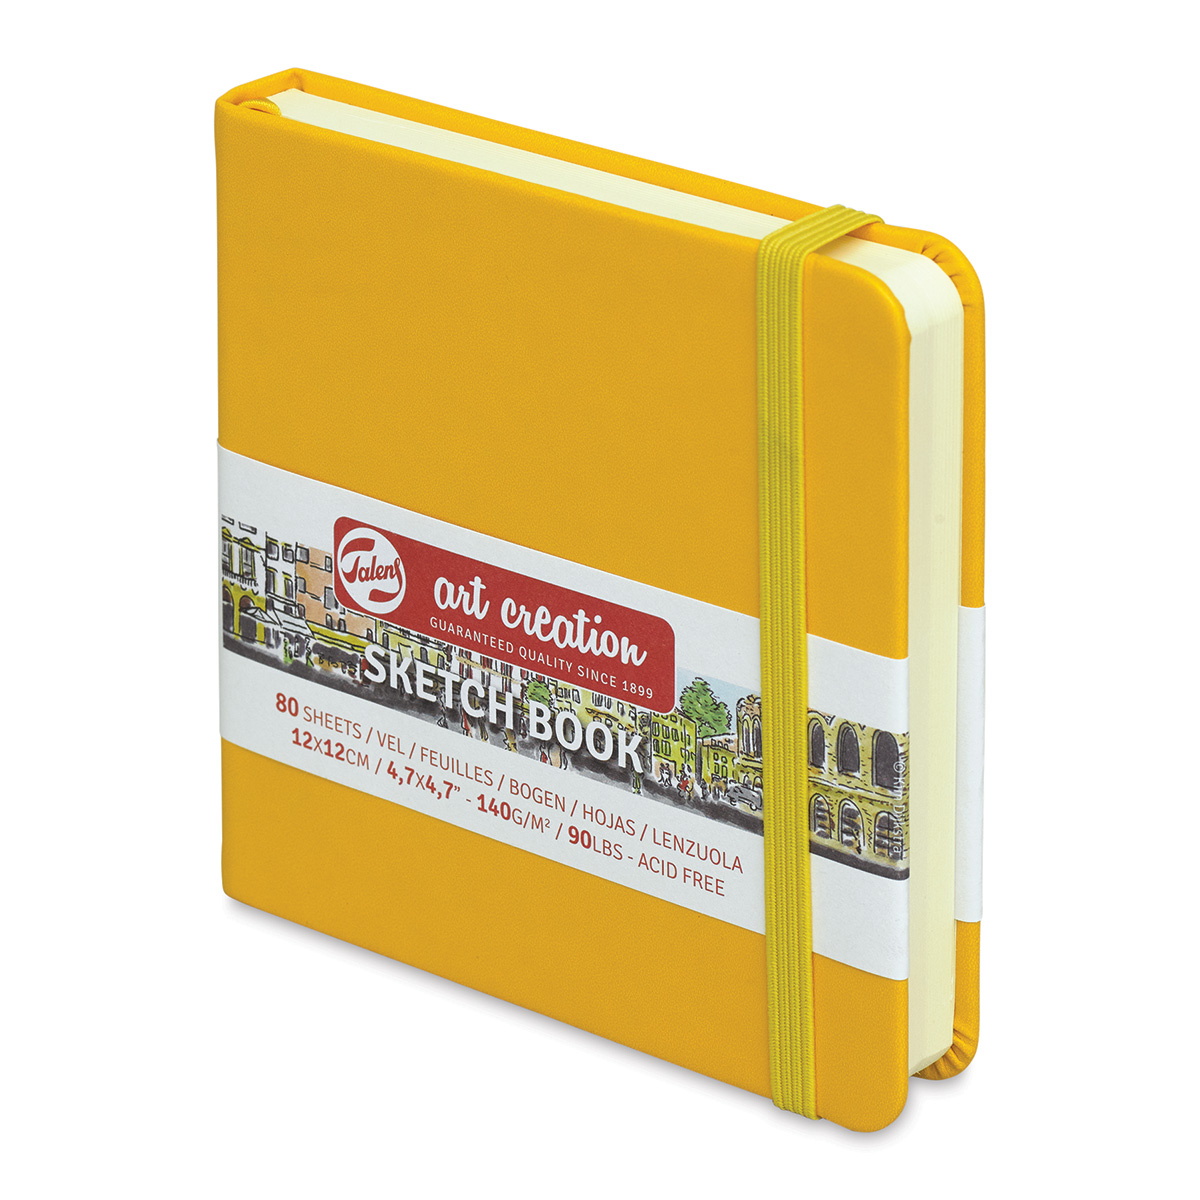 The Big Yellow Drawing Book Newsprint Edition –